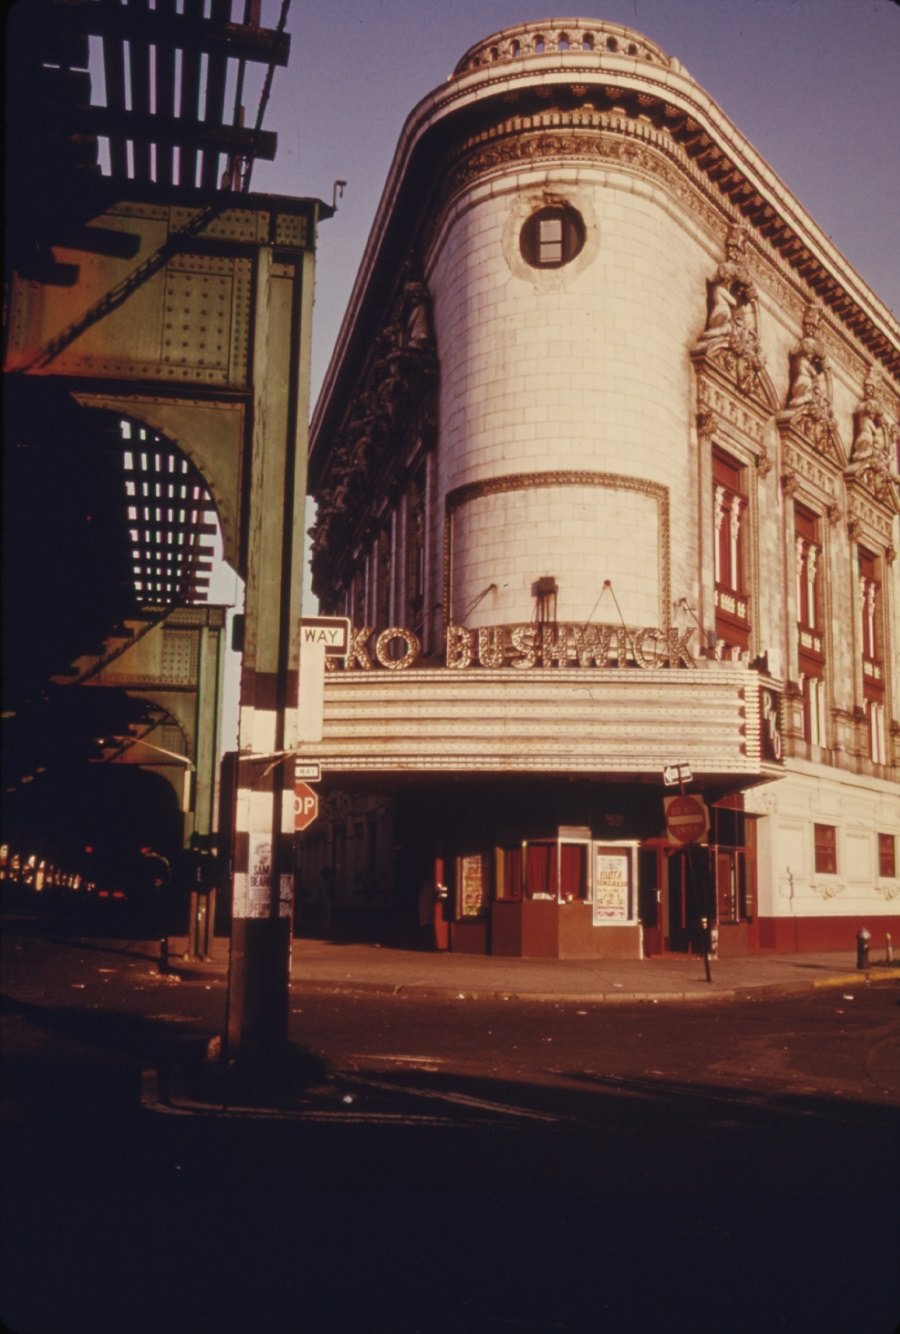 The RKO Bushwick Theater, at the Bushwick/Bed-Stuy border, 1974.